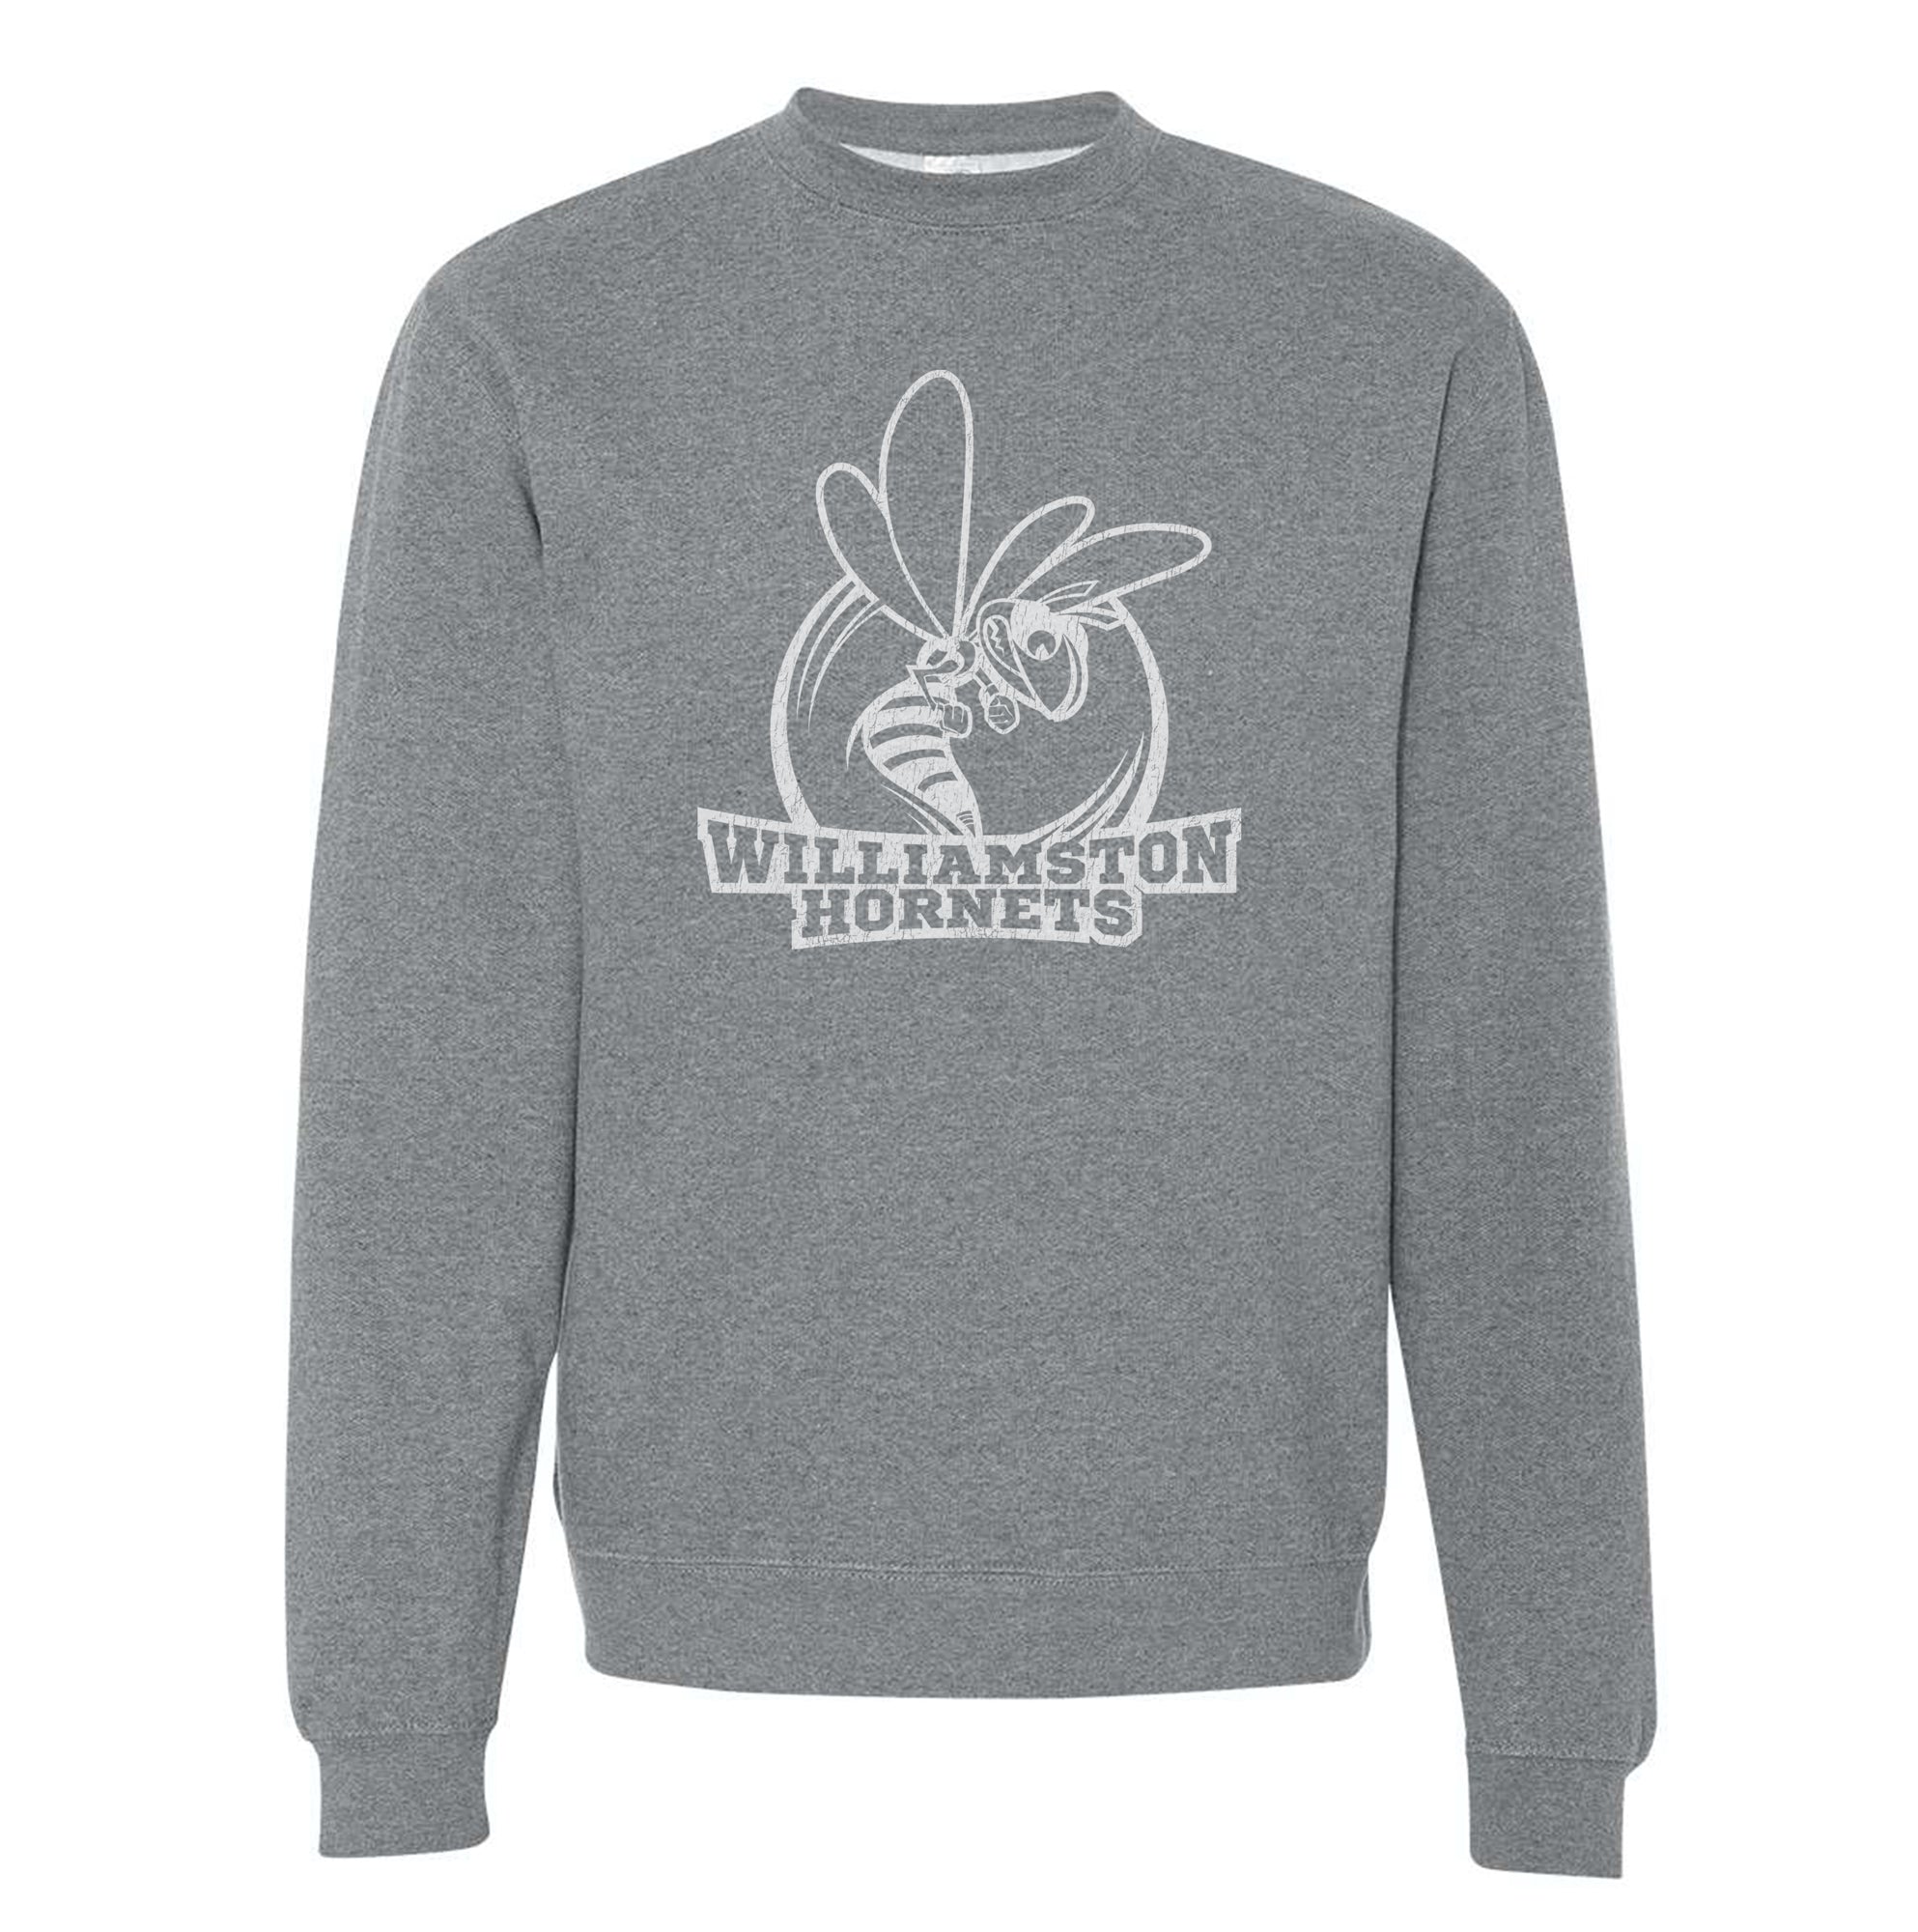 "Williamston" Hornet Outline - Vintage - Adult Comfy Sweatshirt